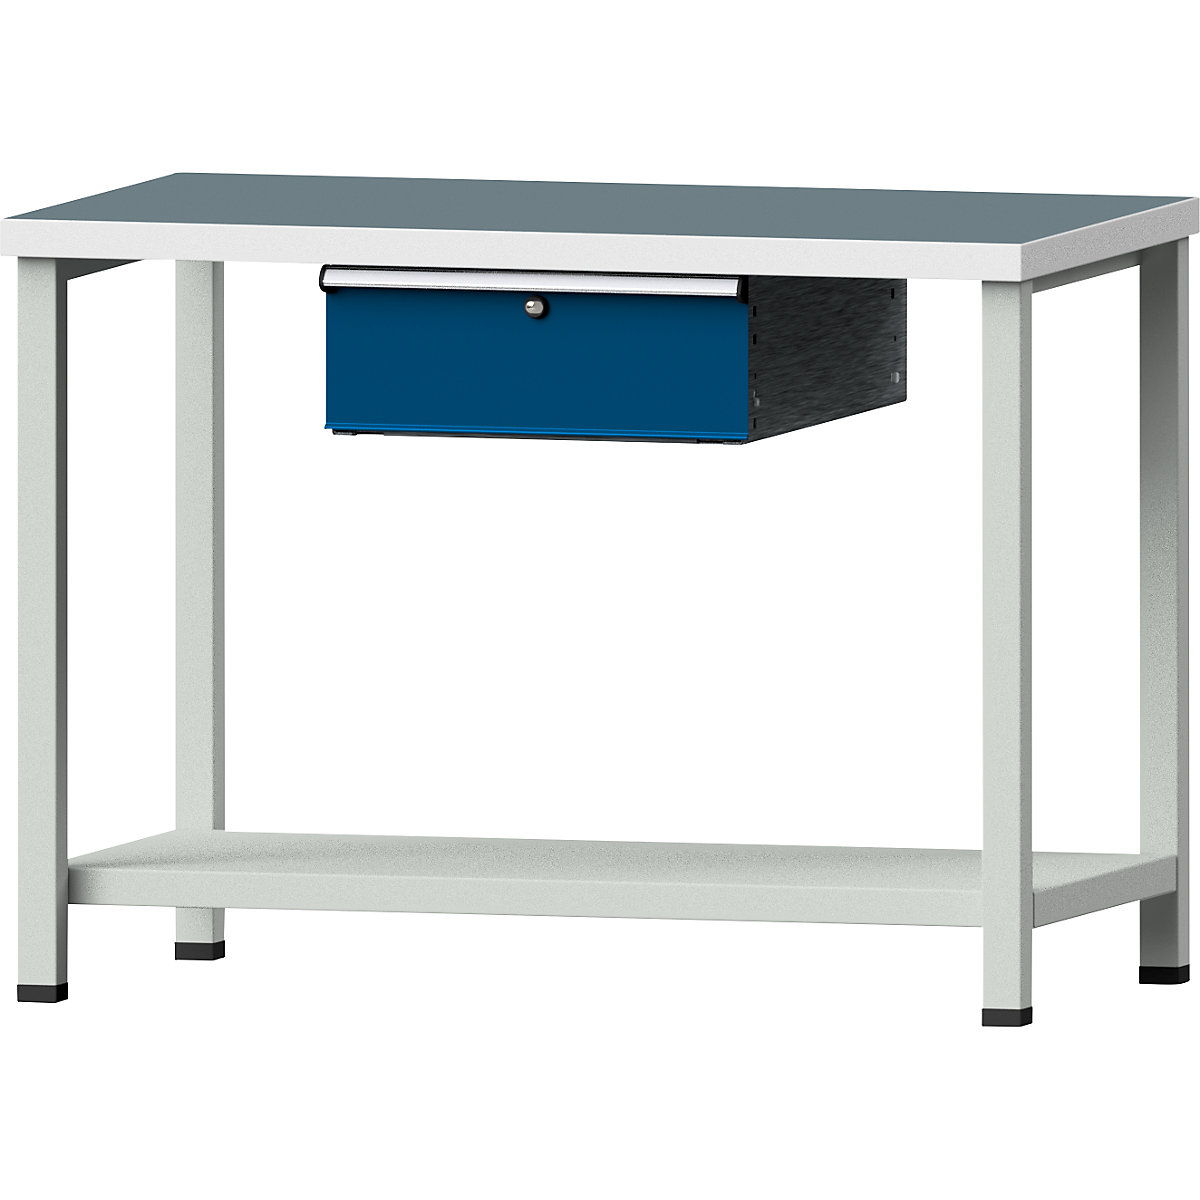 Compact workbench – ANKE, WxD 1140 x 650 mm, 1 drawer, stationary, universal worktop-3